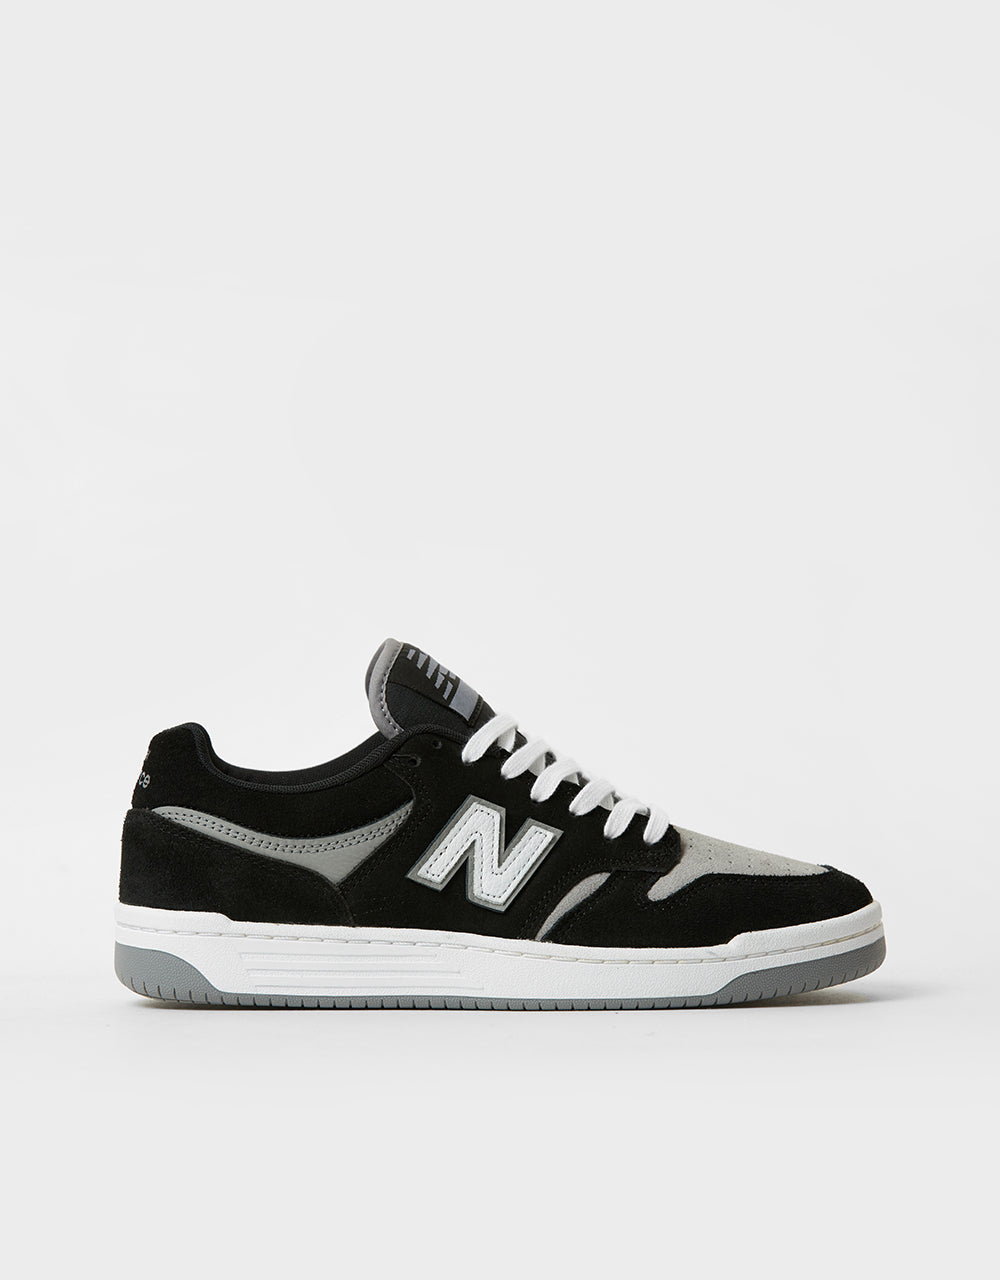 New Balance Numeric 480 Skate Shoes - White/Black